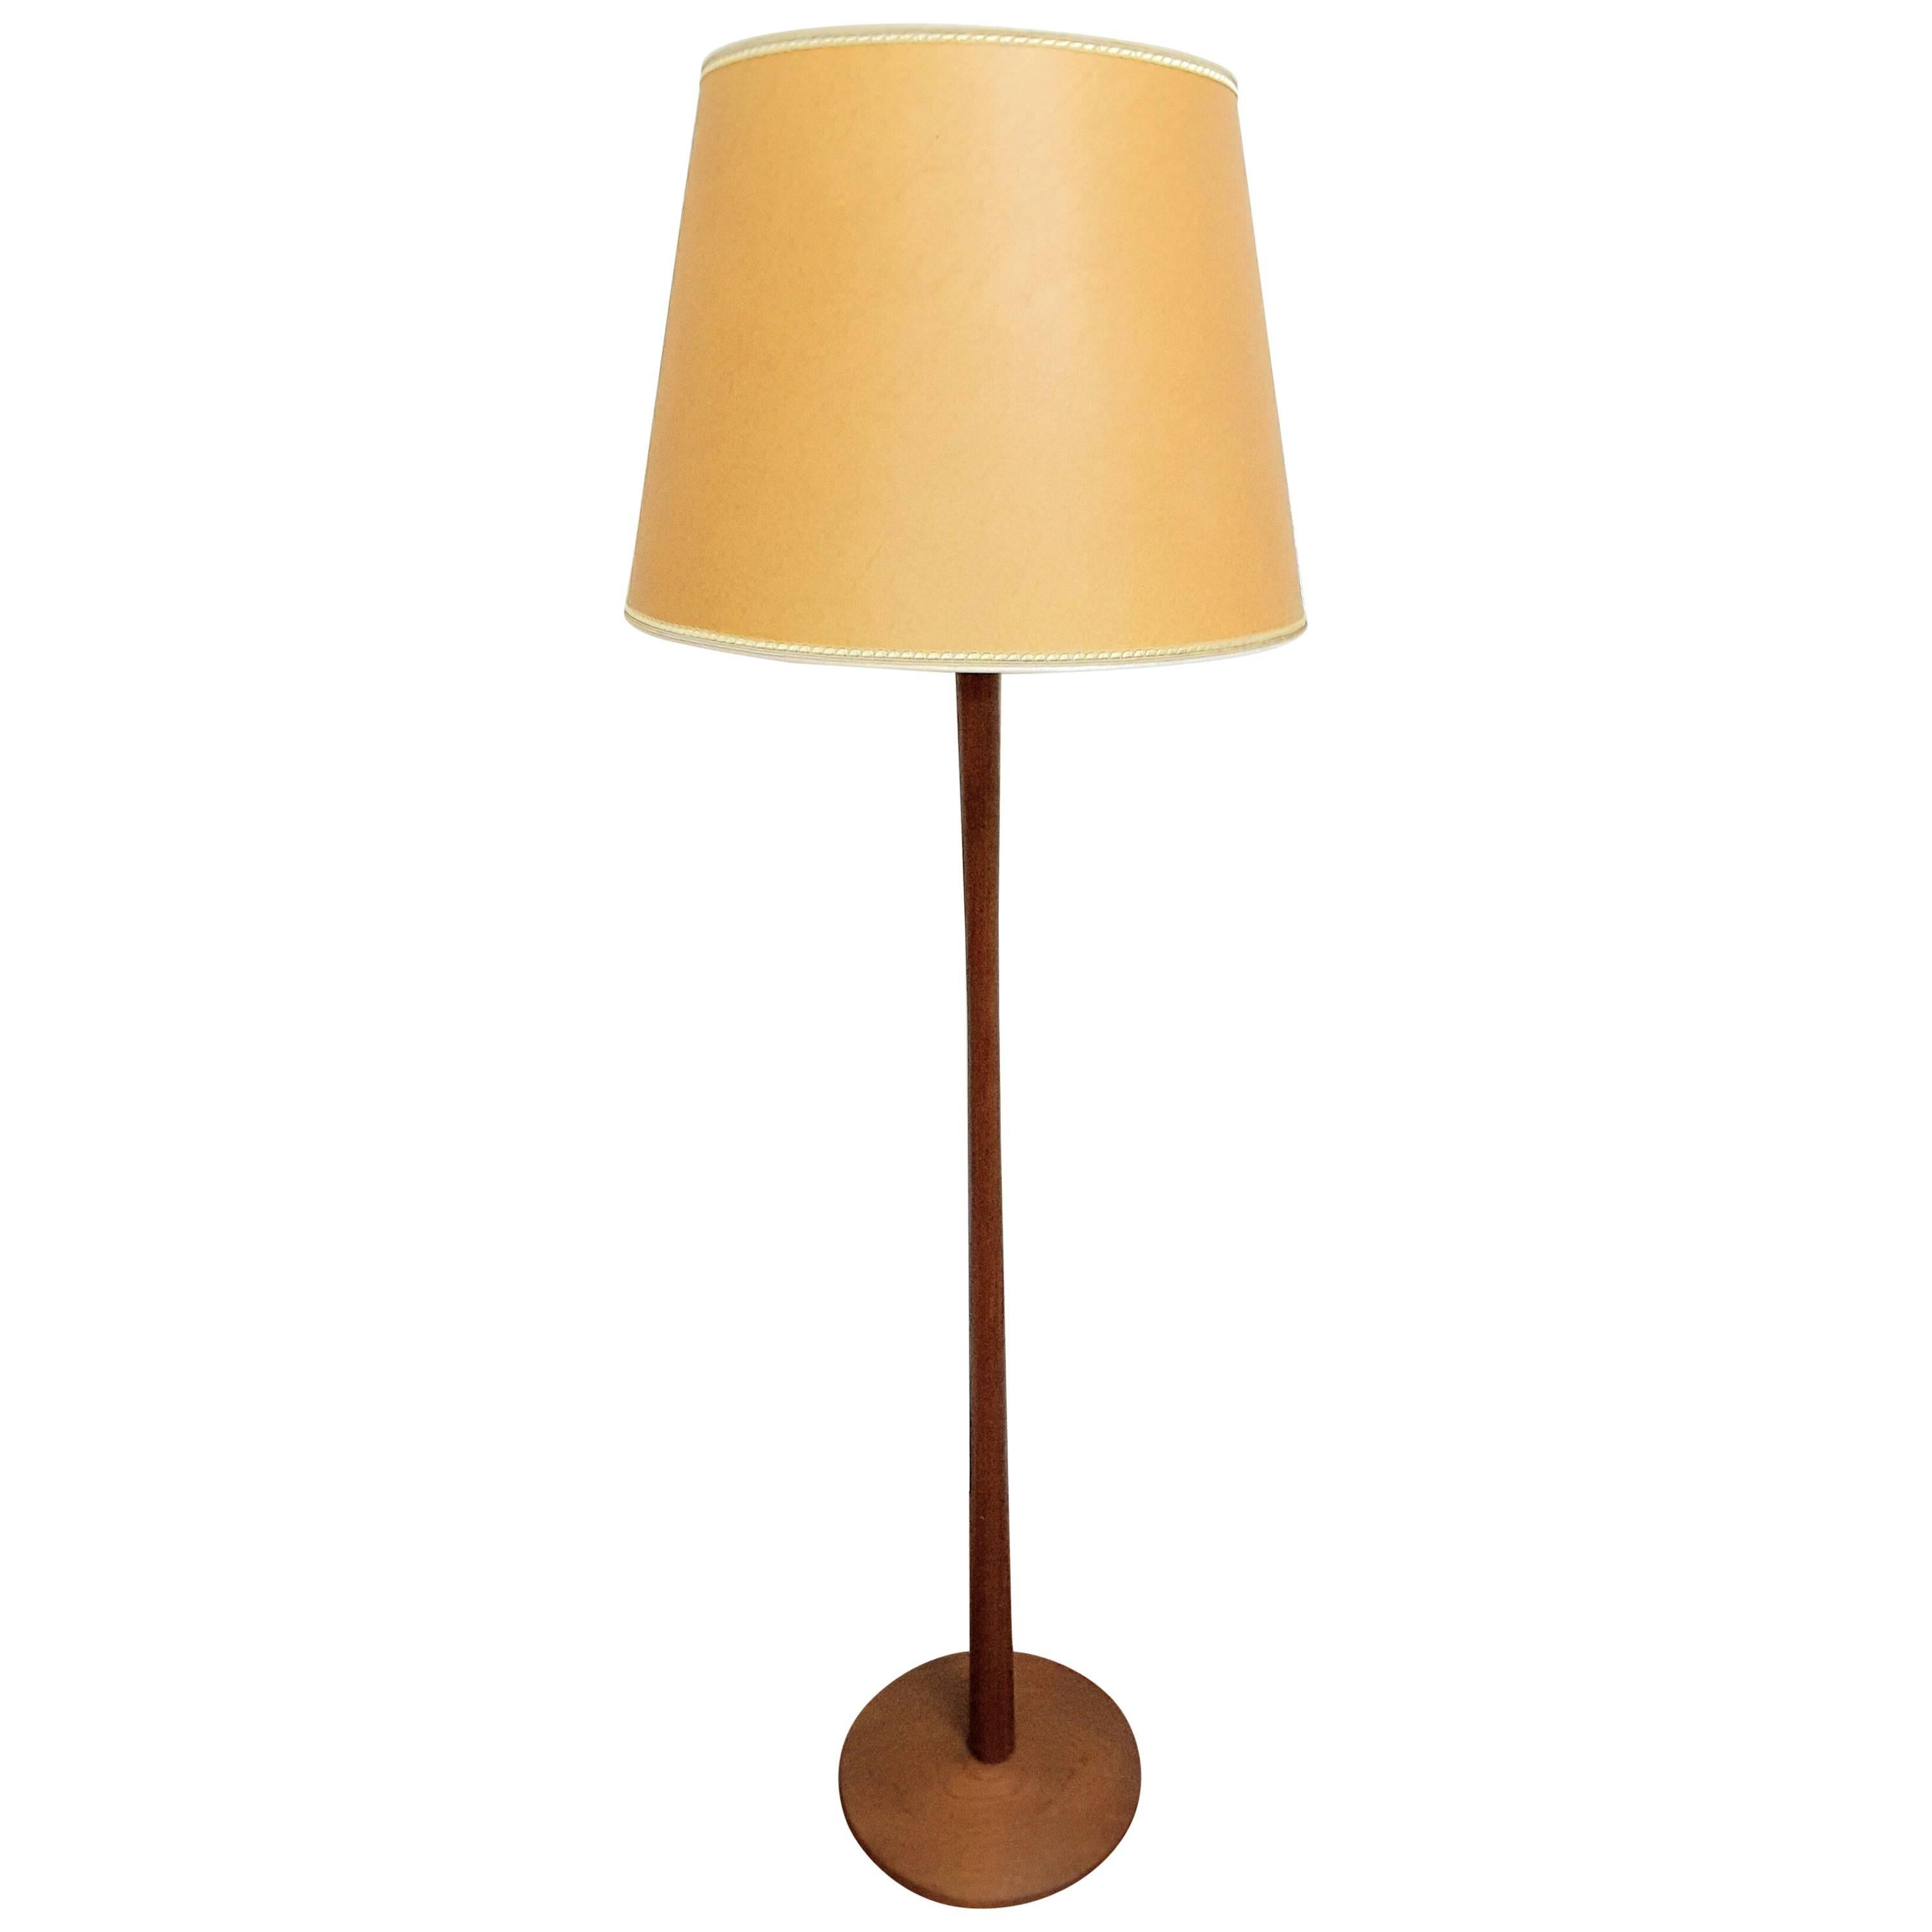 mid century floor lamps for sale